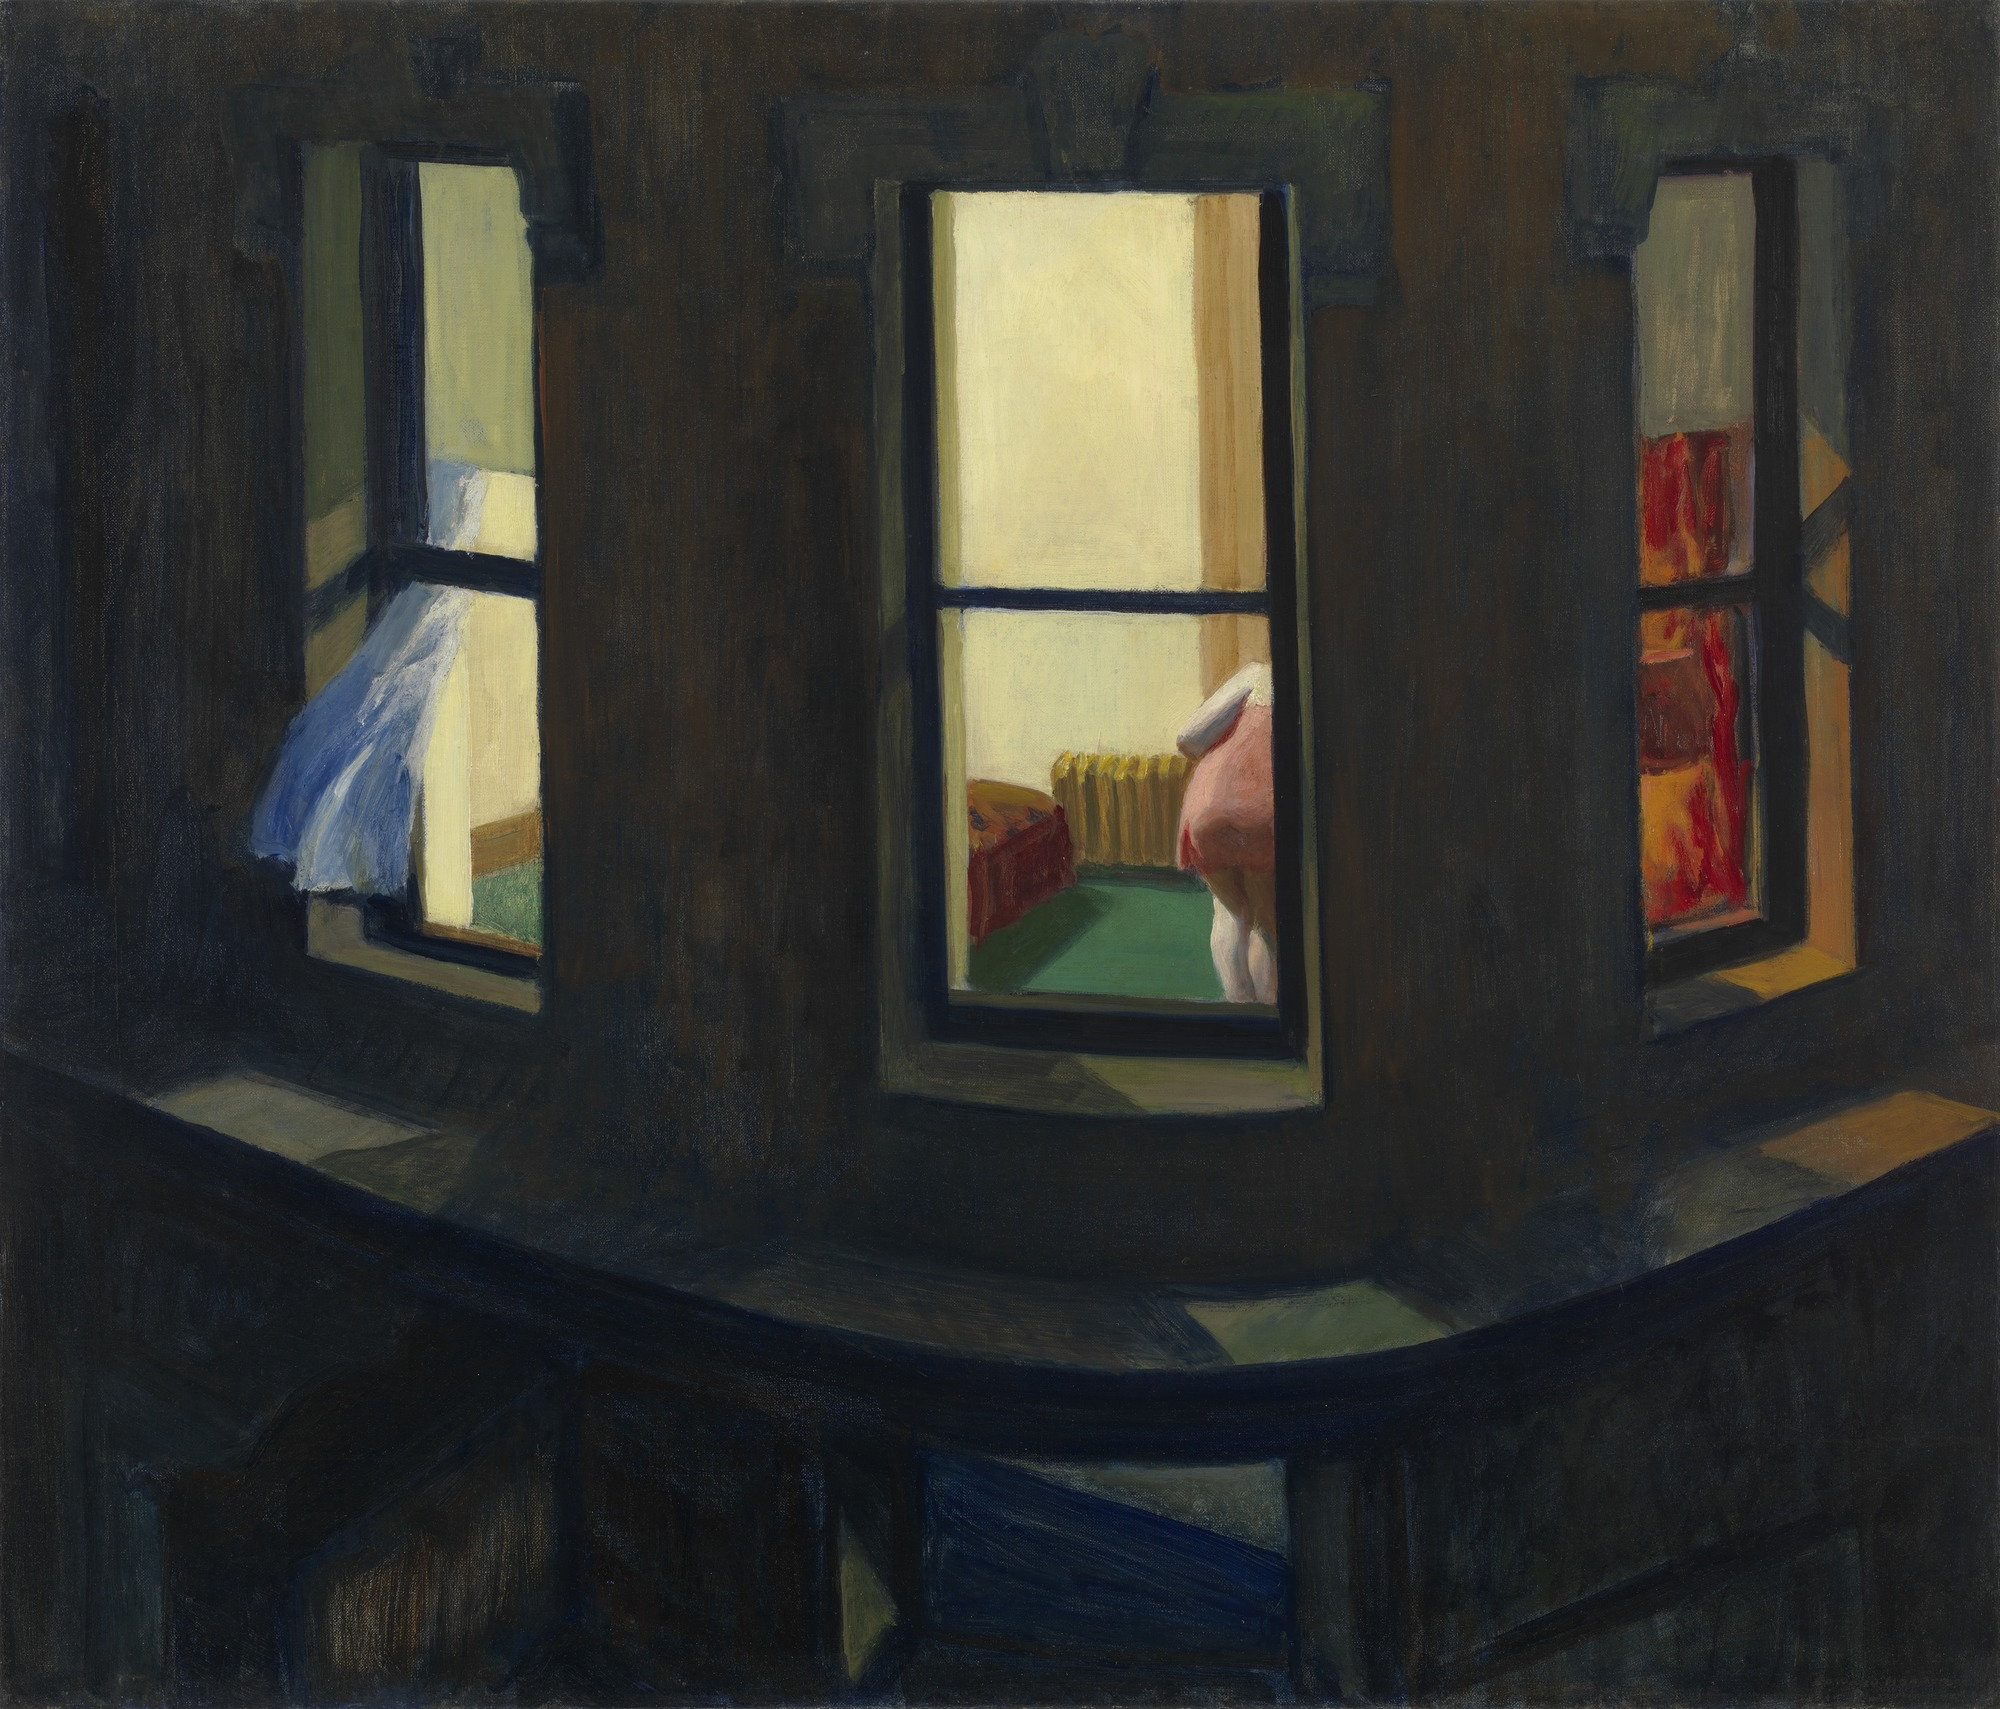 Edward Hopper, “Night Windows”, 1928